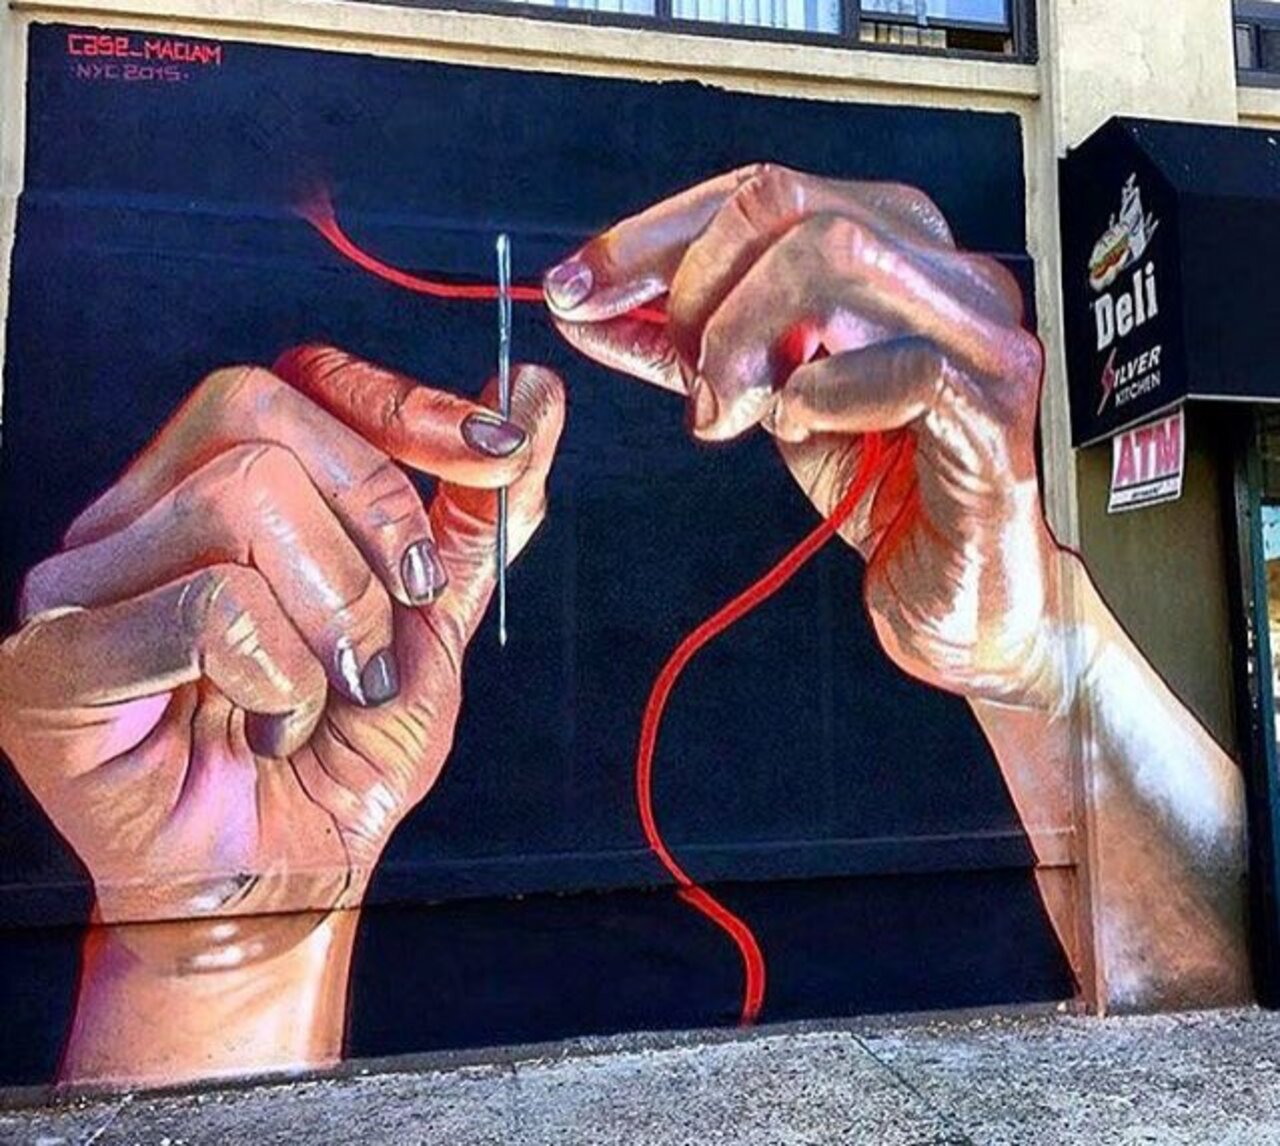 RT @buzz_sandyltn: New Street Art by Case Ma'Claim in NYC 

#art #graffiti #mural #streetart https://t.co/QPAkEHRUNv